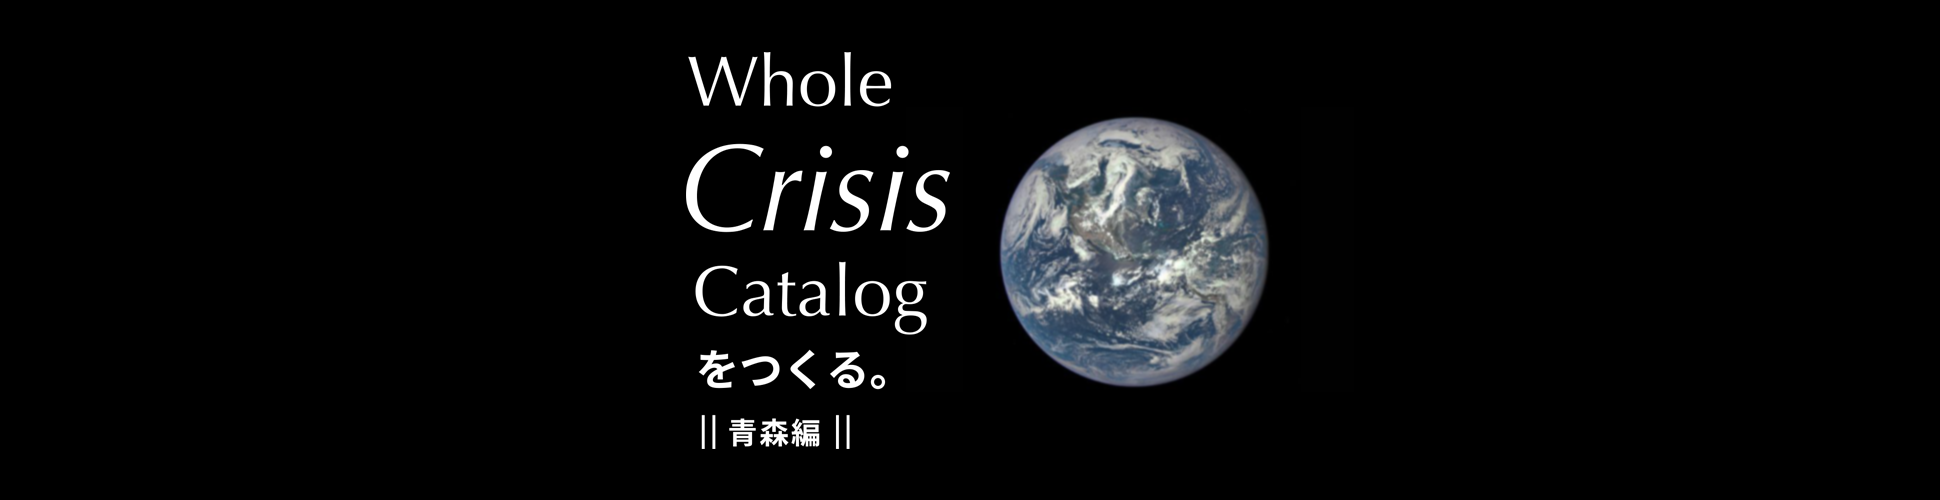 Whole Crisis Catalog をつくる。|| 青森編 ||